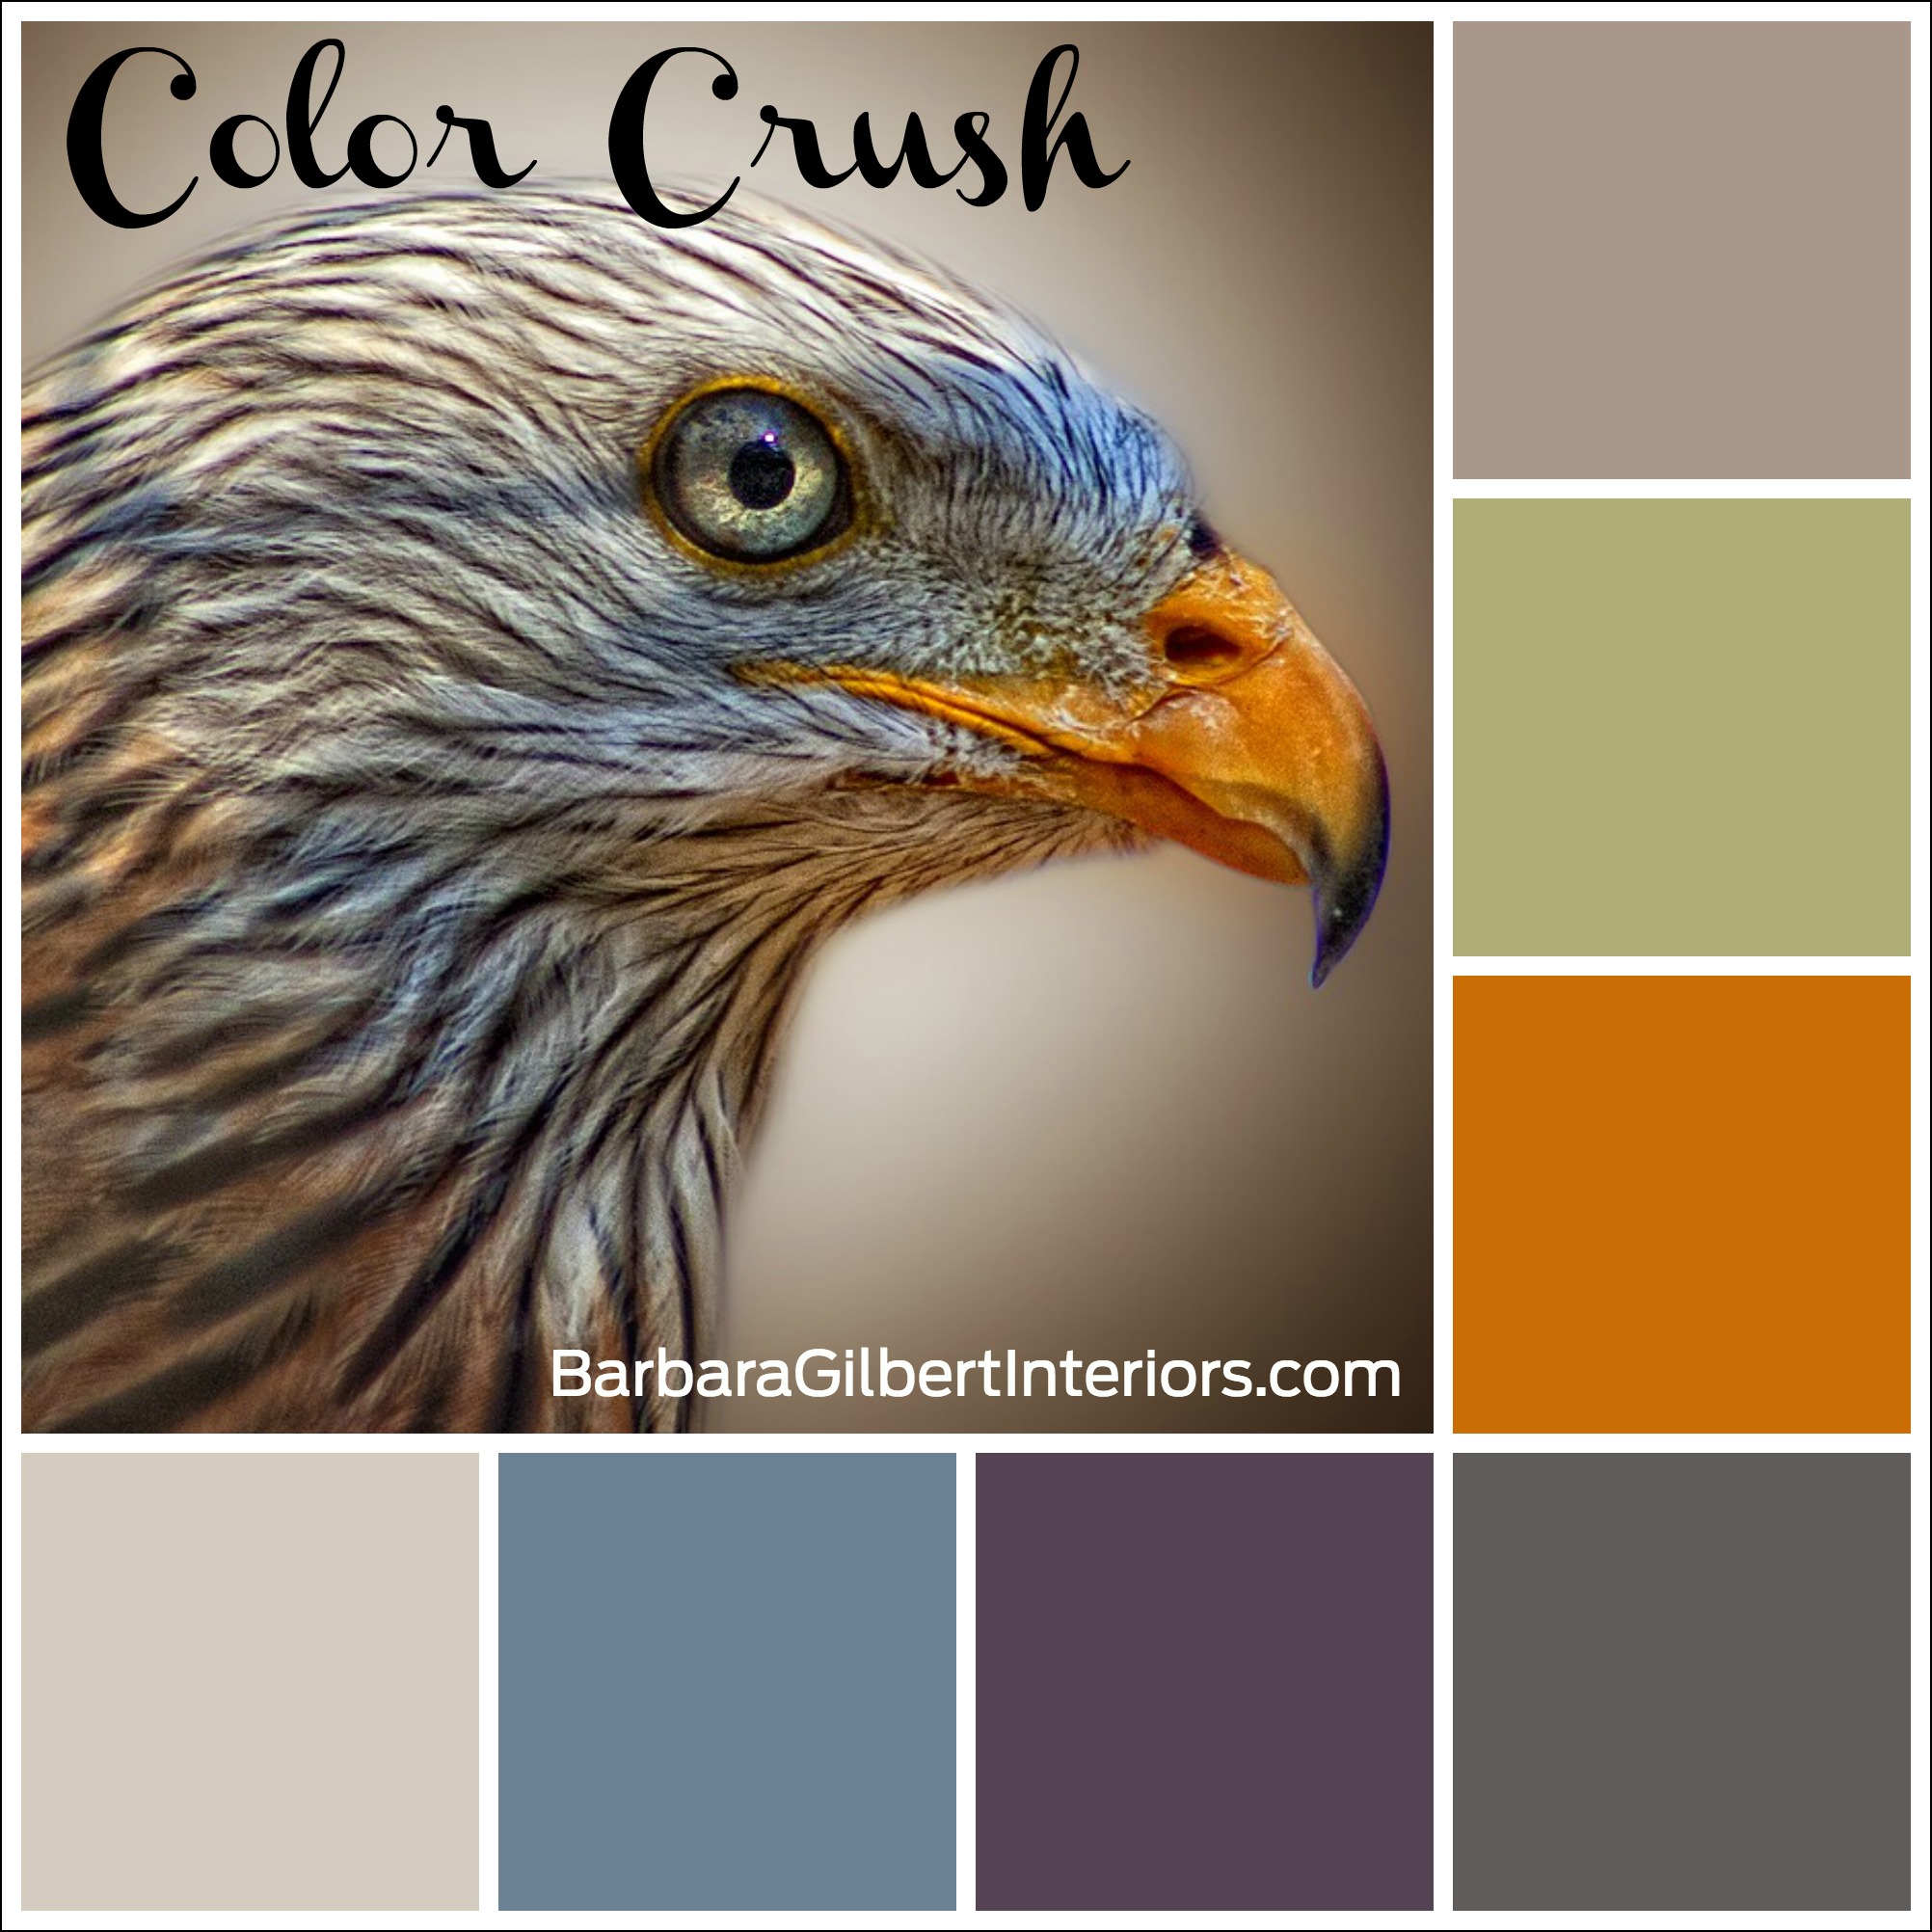 Color Crush: Bird of Prey | Interior Design Dallas | Barbara Gilbert Interiors